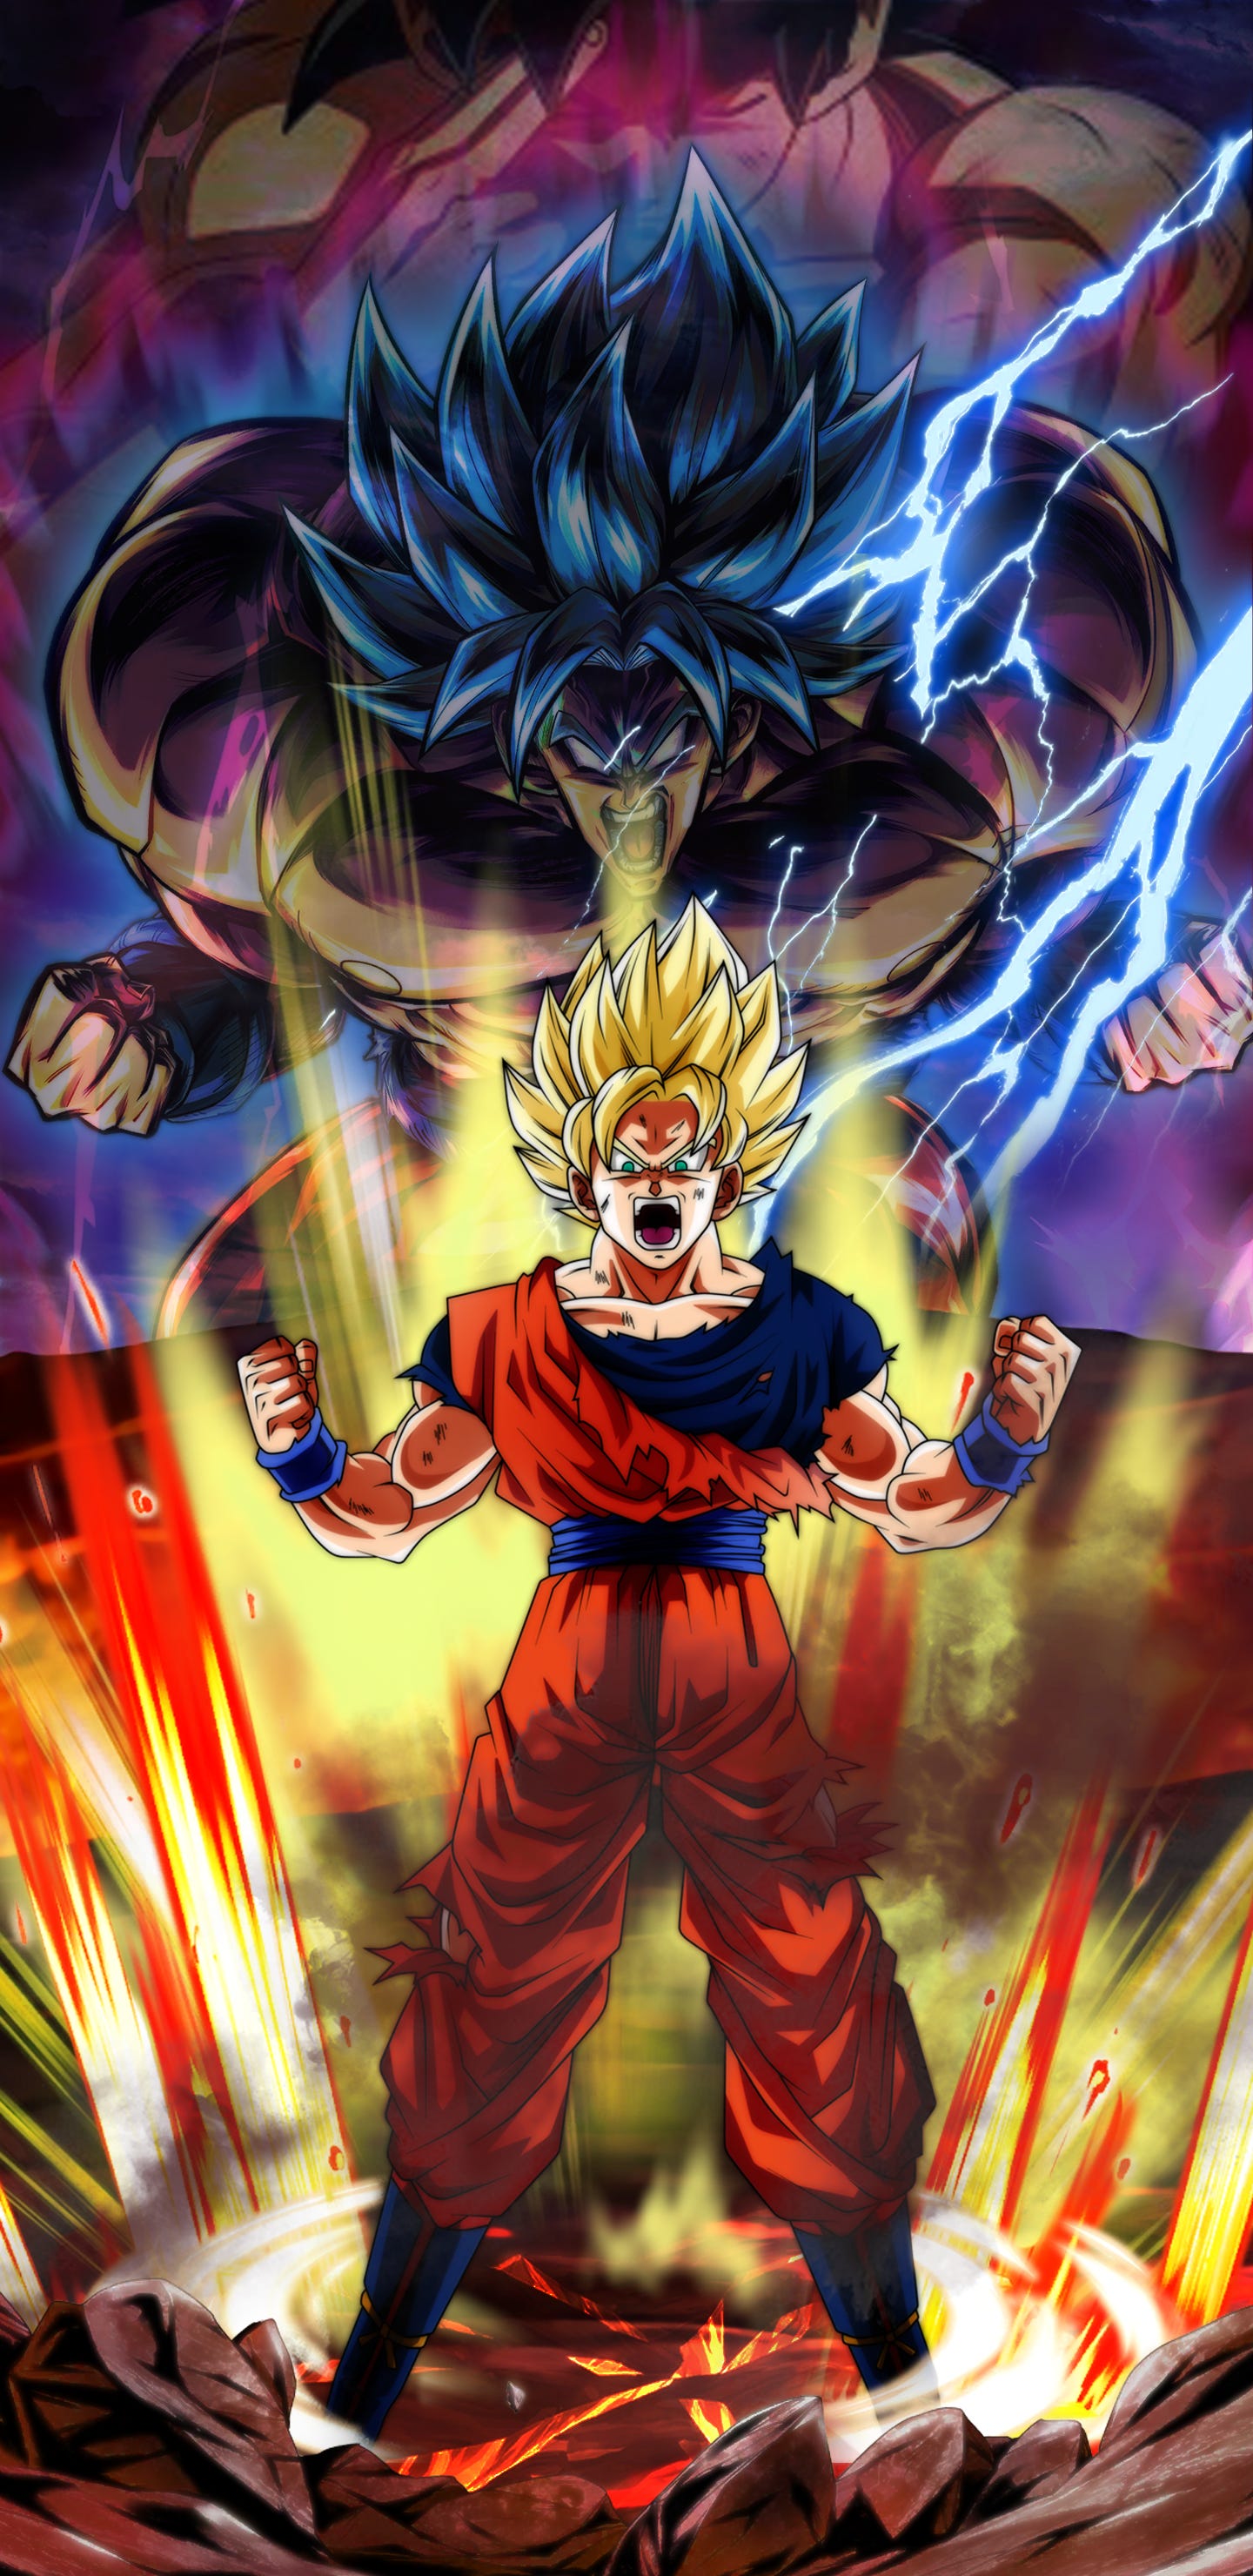 r/DragonballLegends - What-If Stories: Goku, The Legendary Super Saiyan.